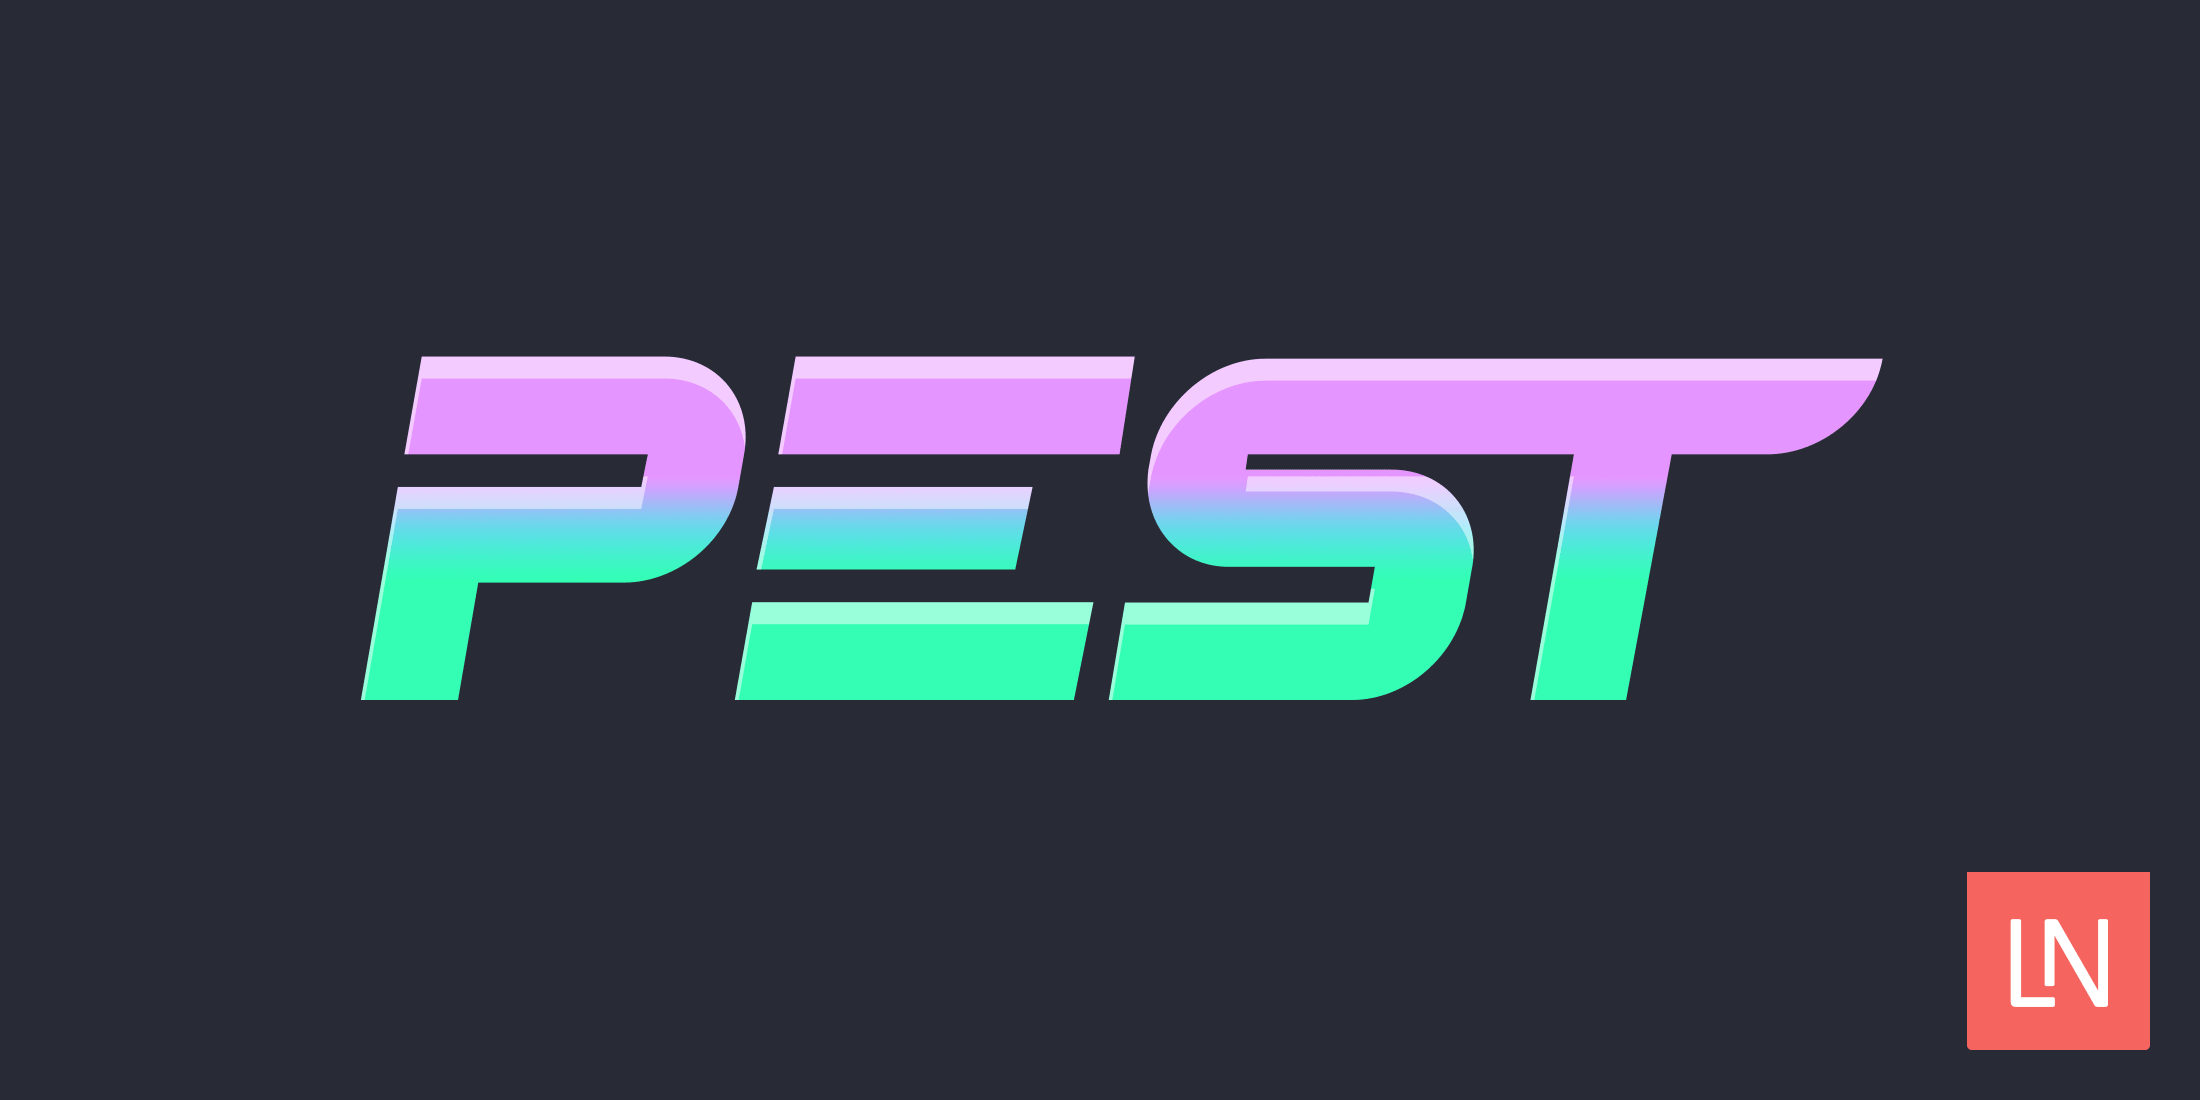 The future of Pest v2 image